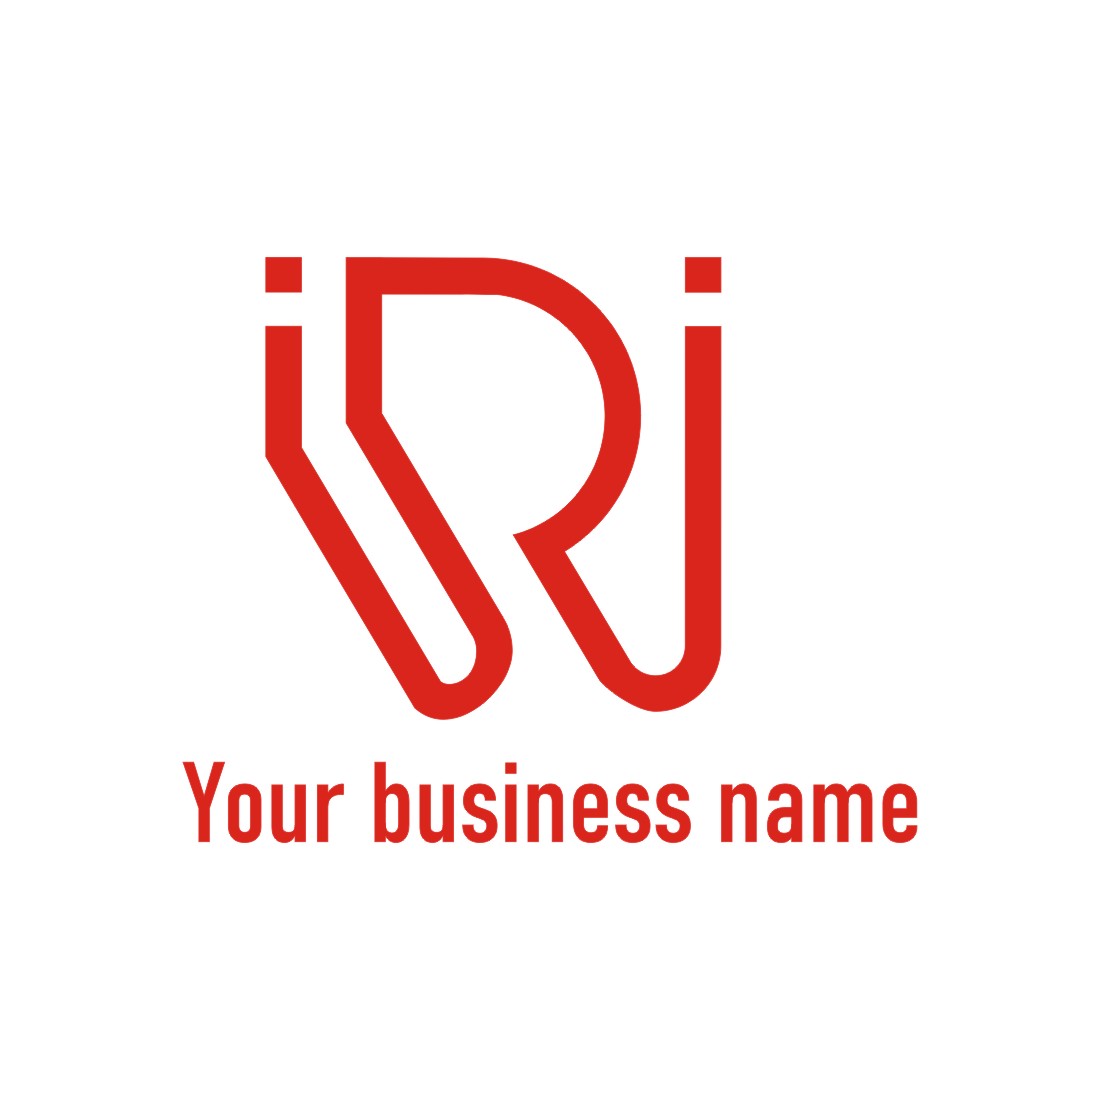 I and R monogram logo preview image.